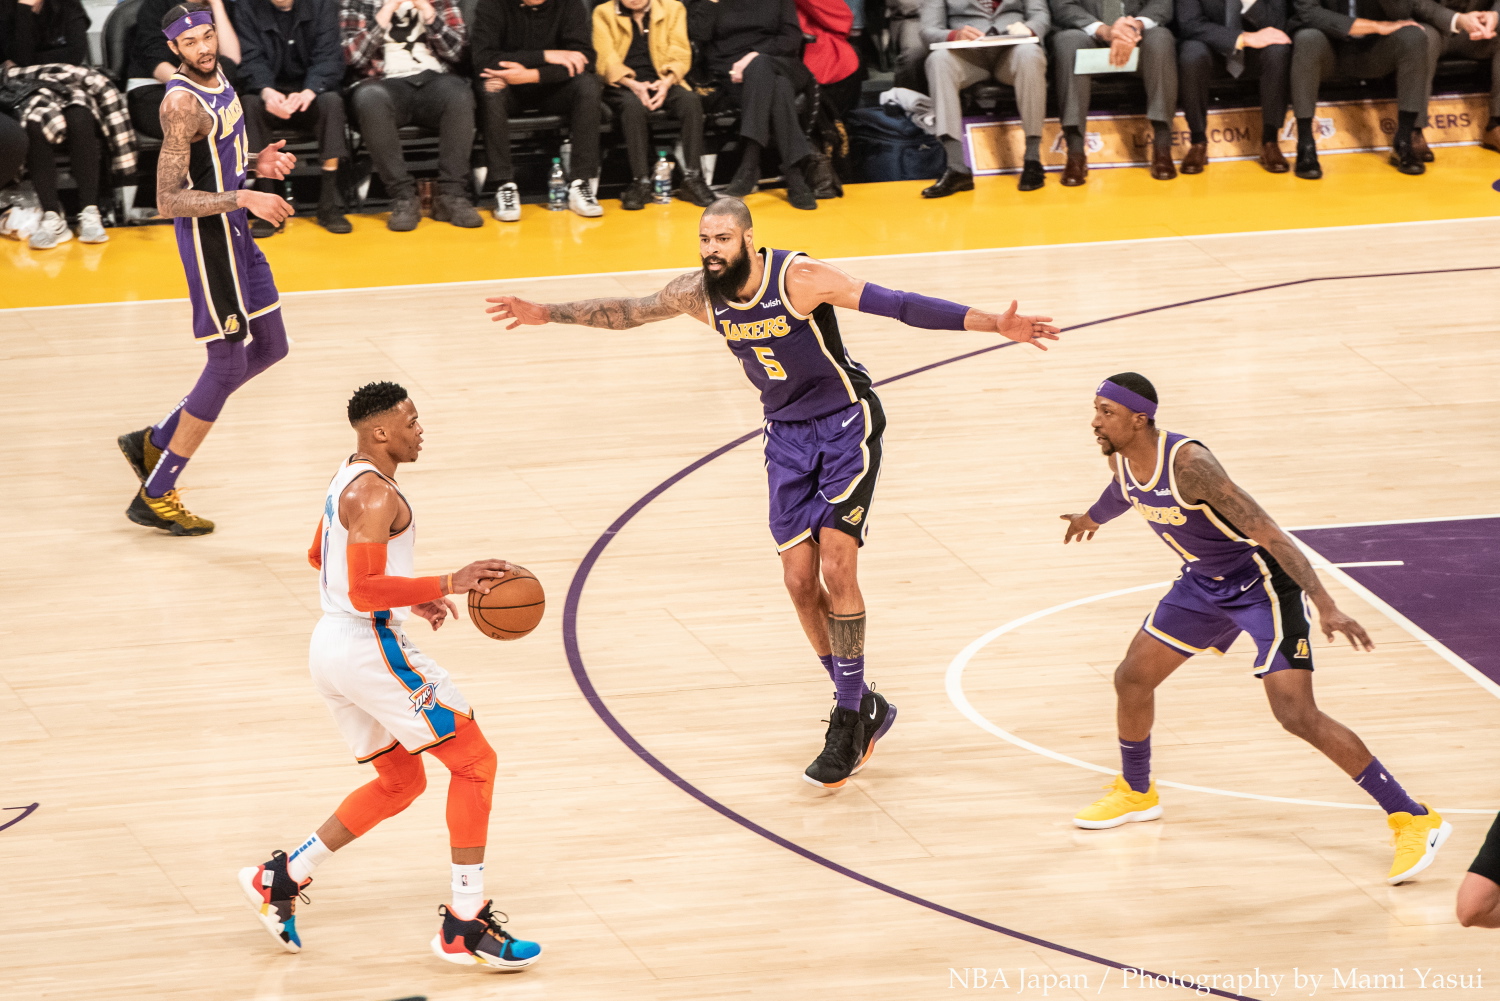 MSP_0161 Thunder vs Lakers, Photo by Mami Yasui/NBA Japan